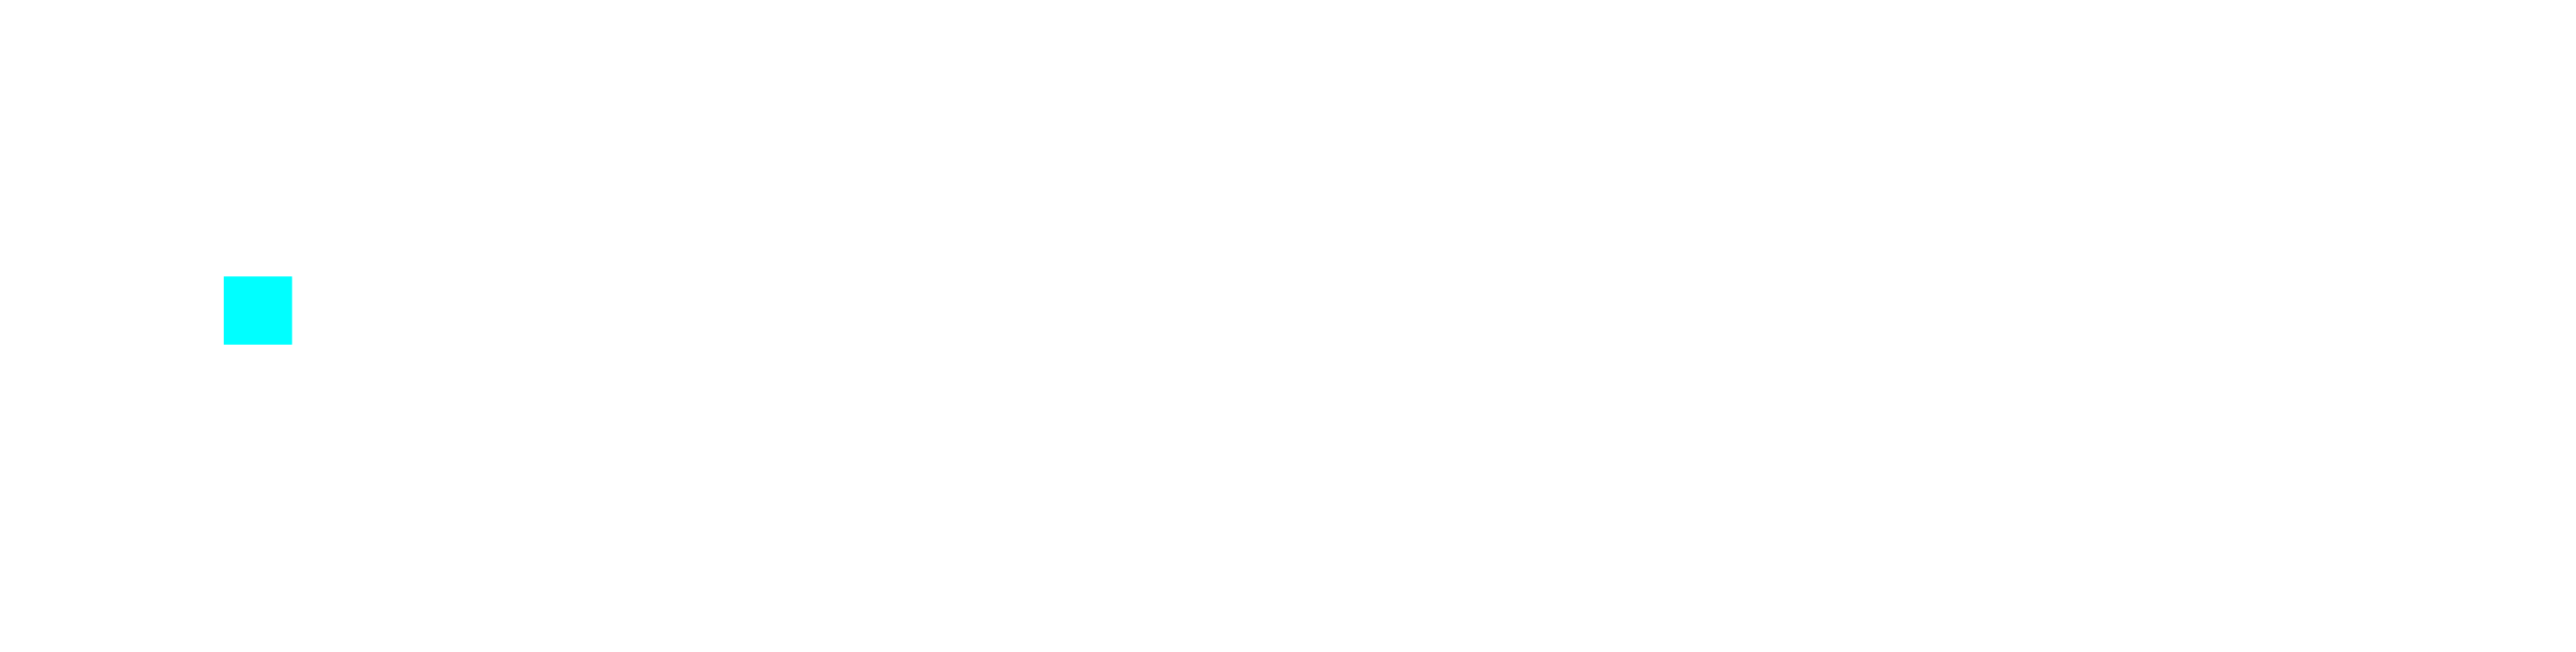 D.O.S. Design Open Spaces s.r.l.